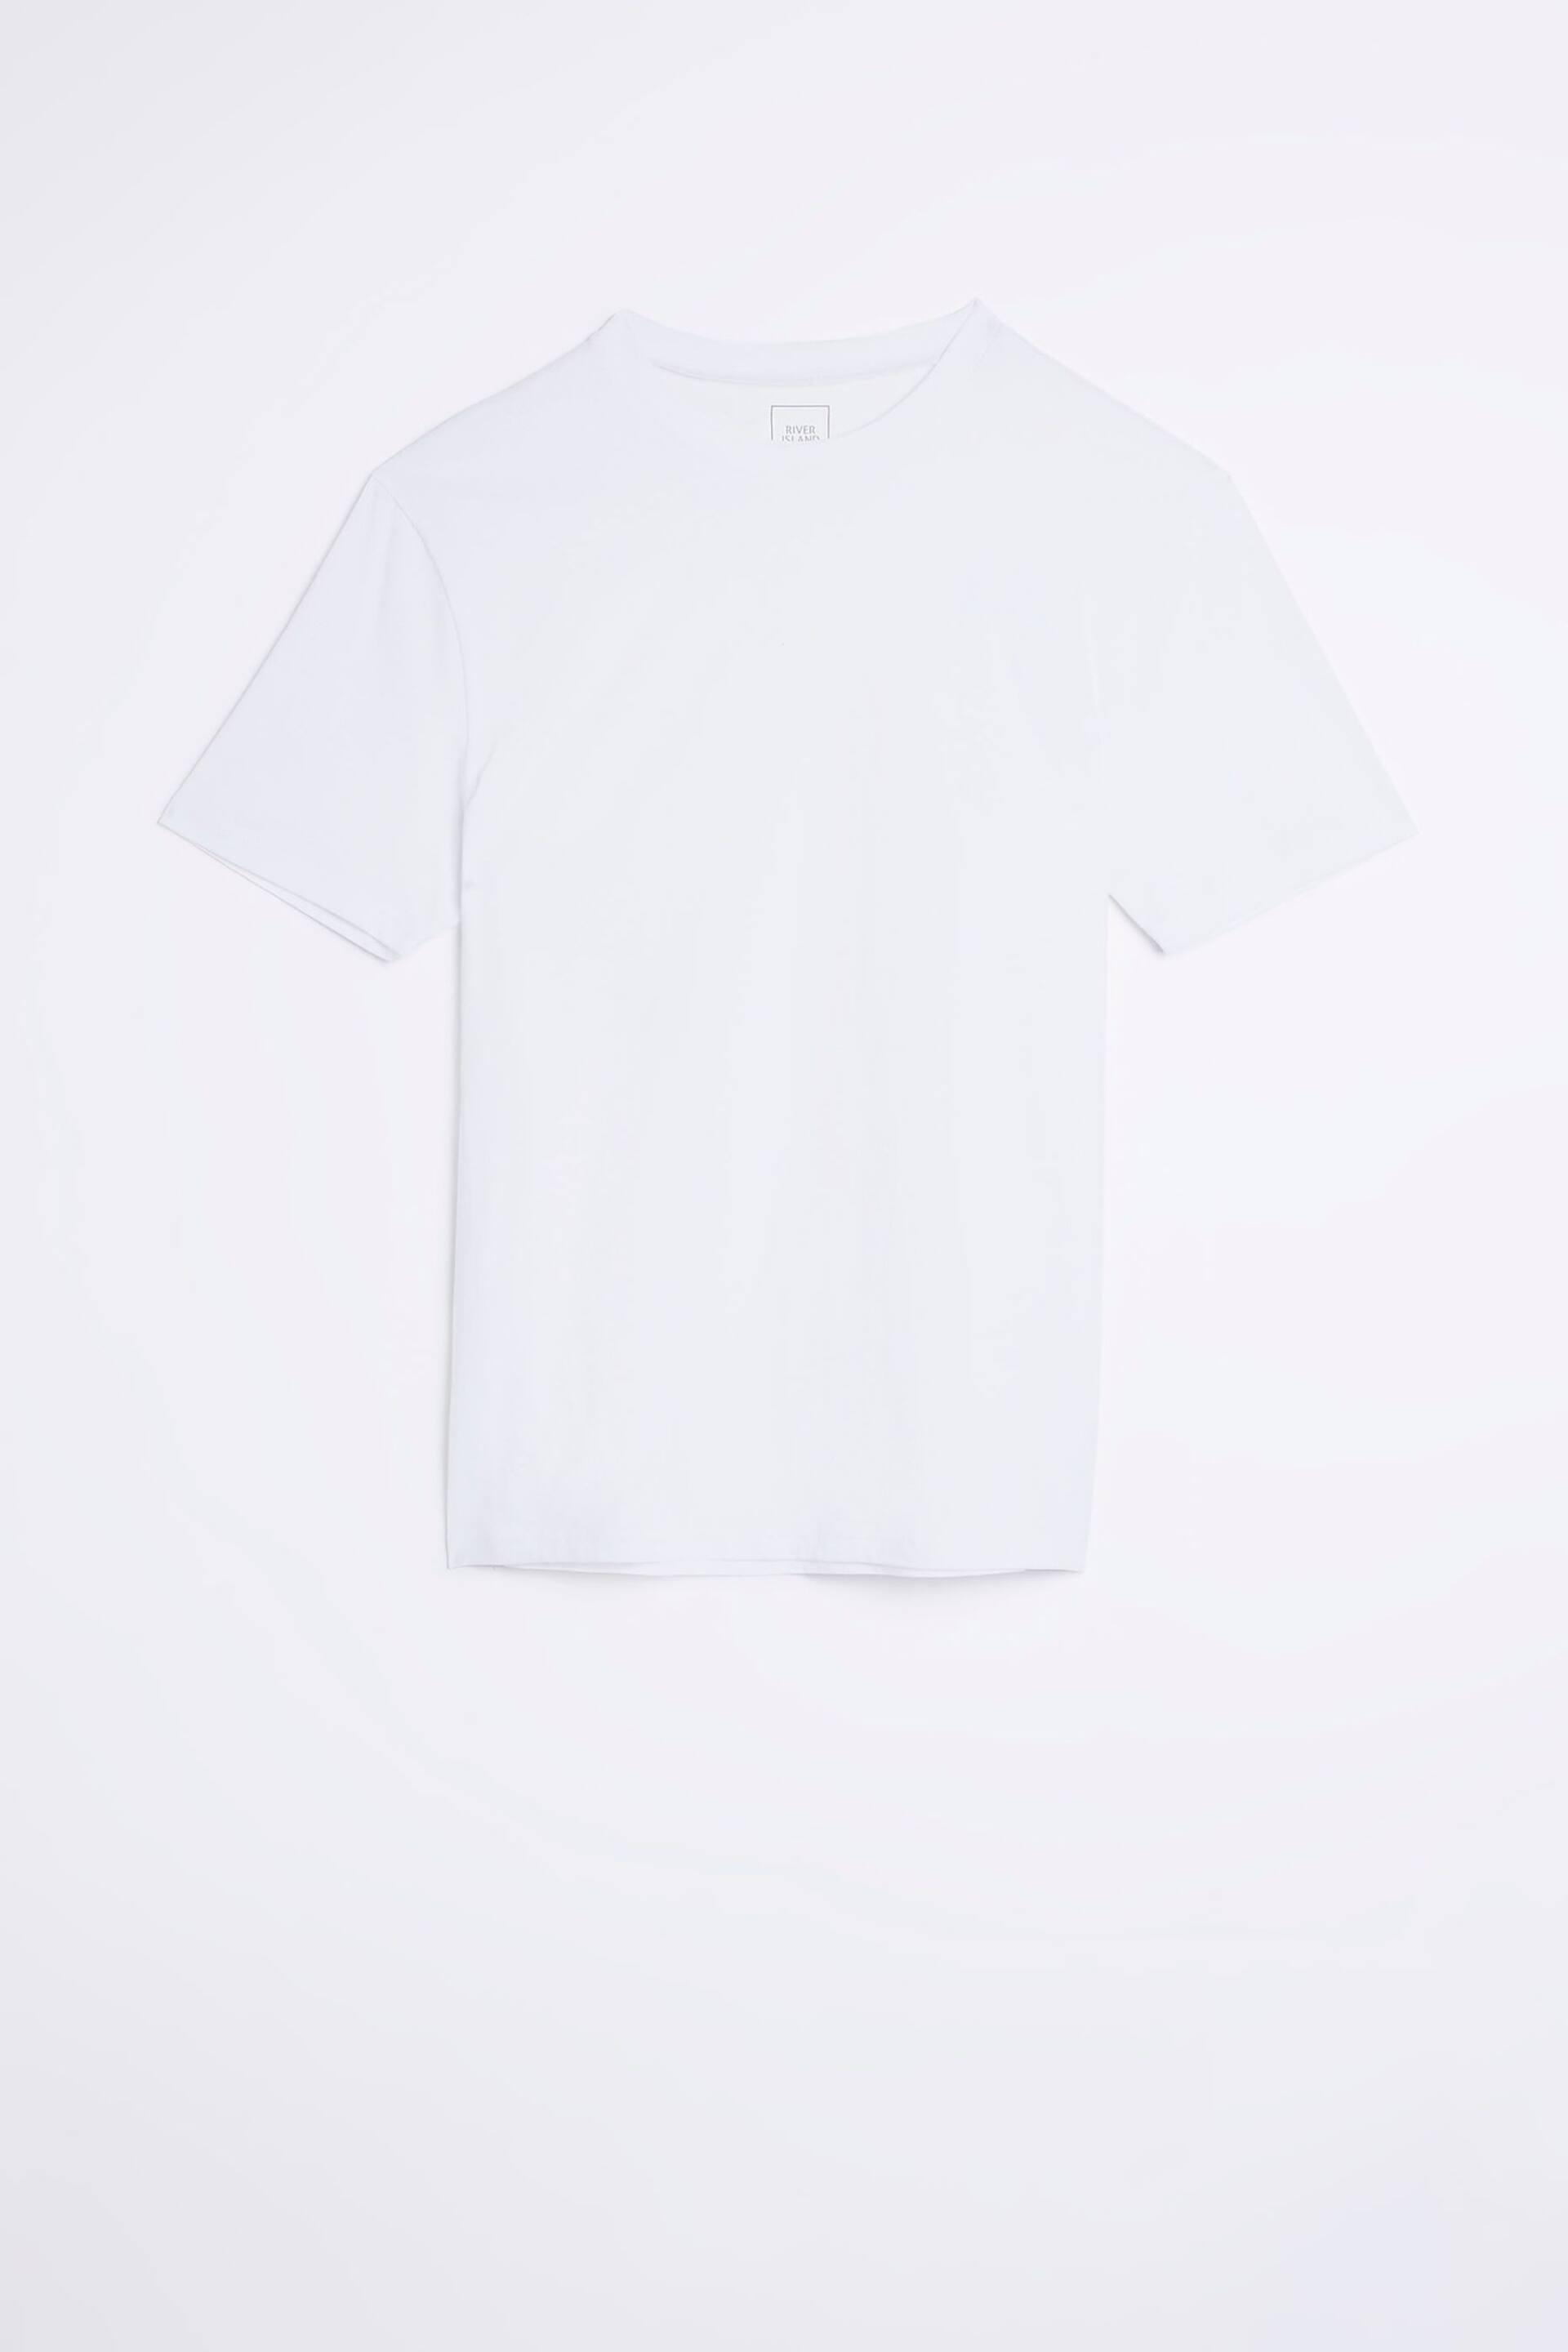 River Island White Regular Fit T-Shirt - Image 4 of 4